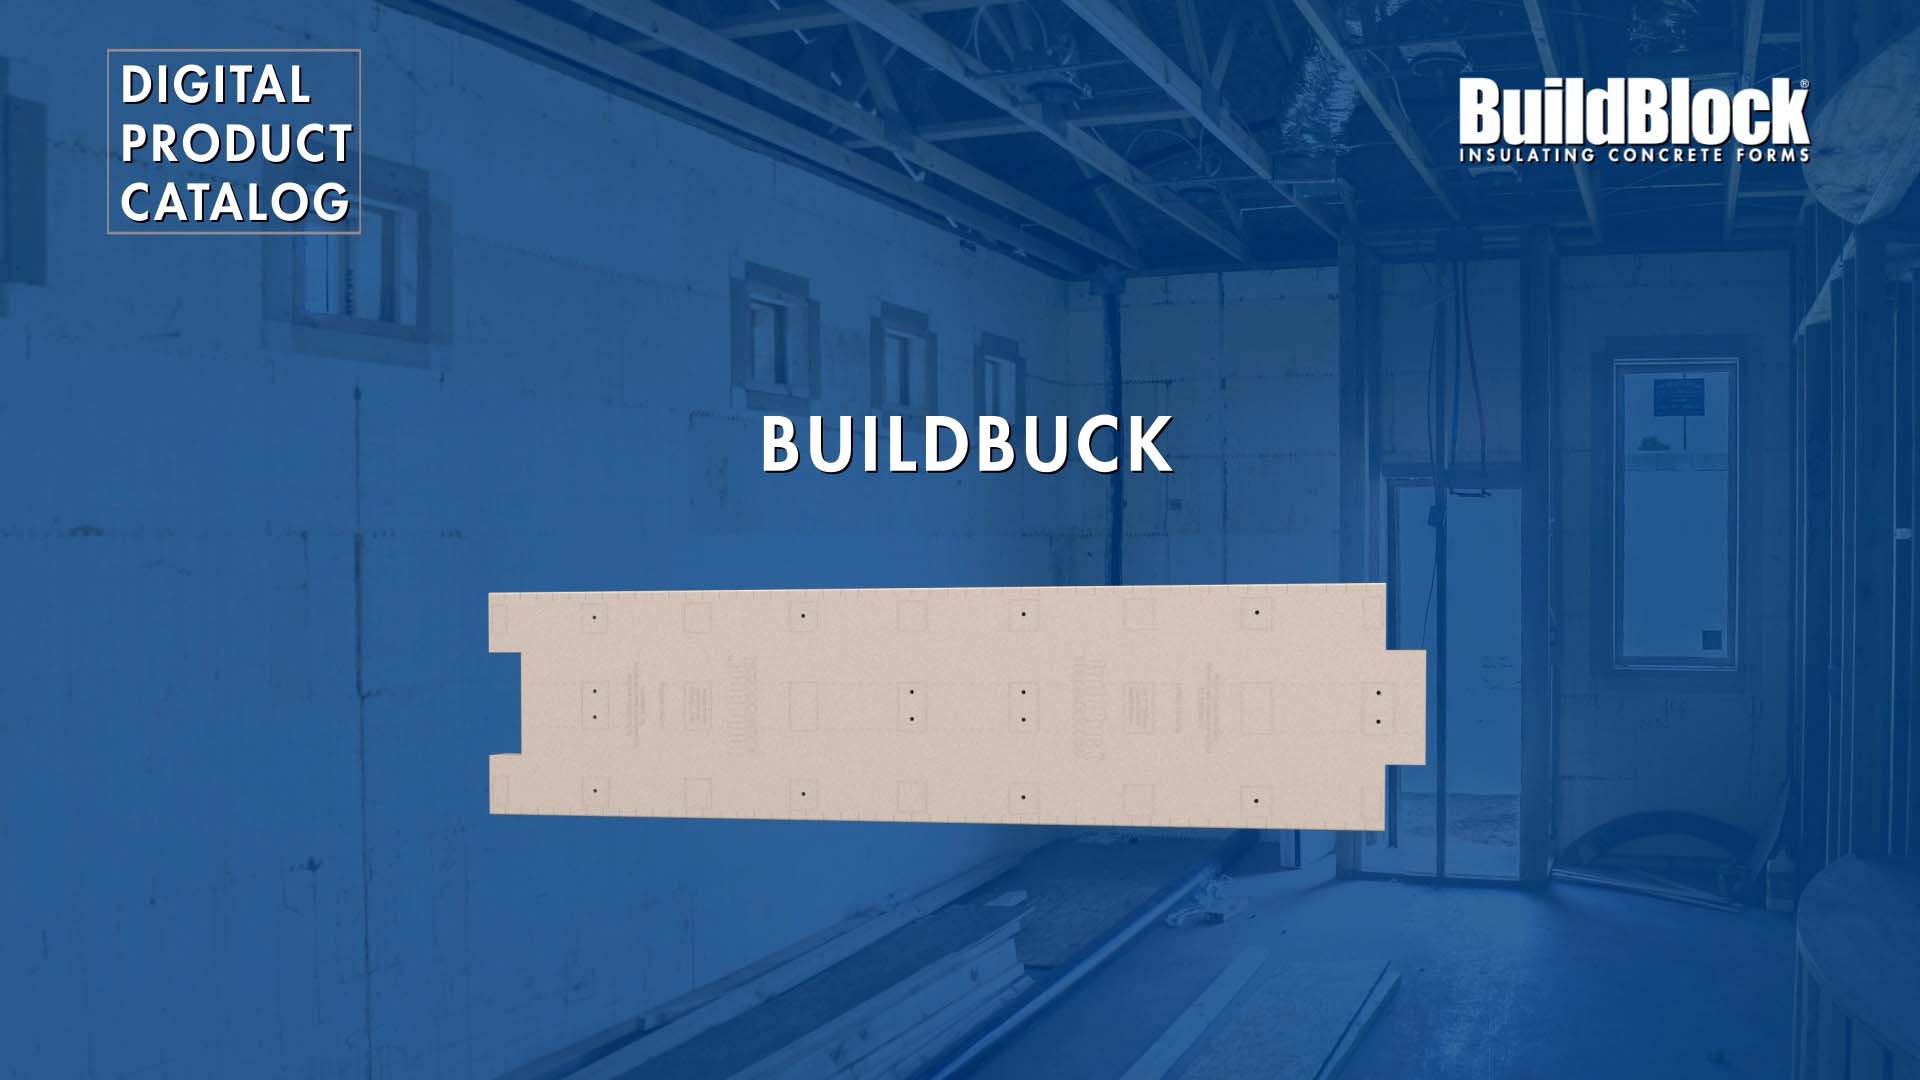 Video: Digital Product Catalog: BuildBuck ICF Bucking